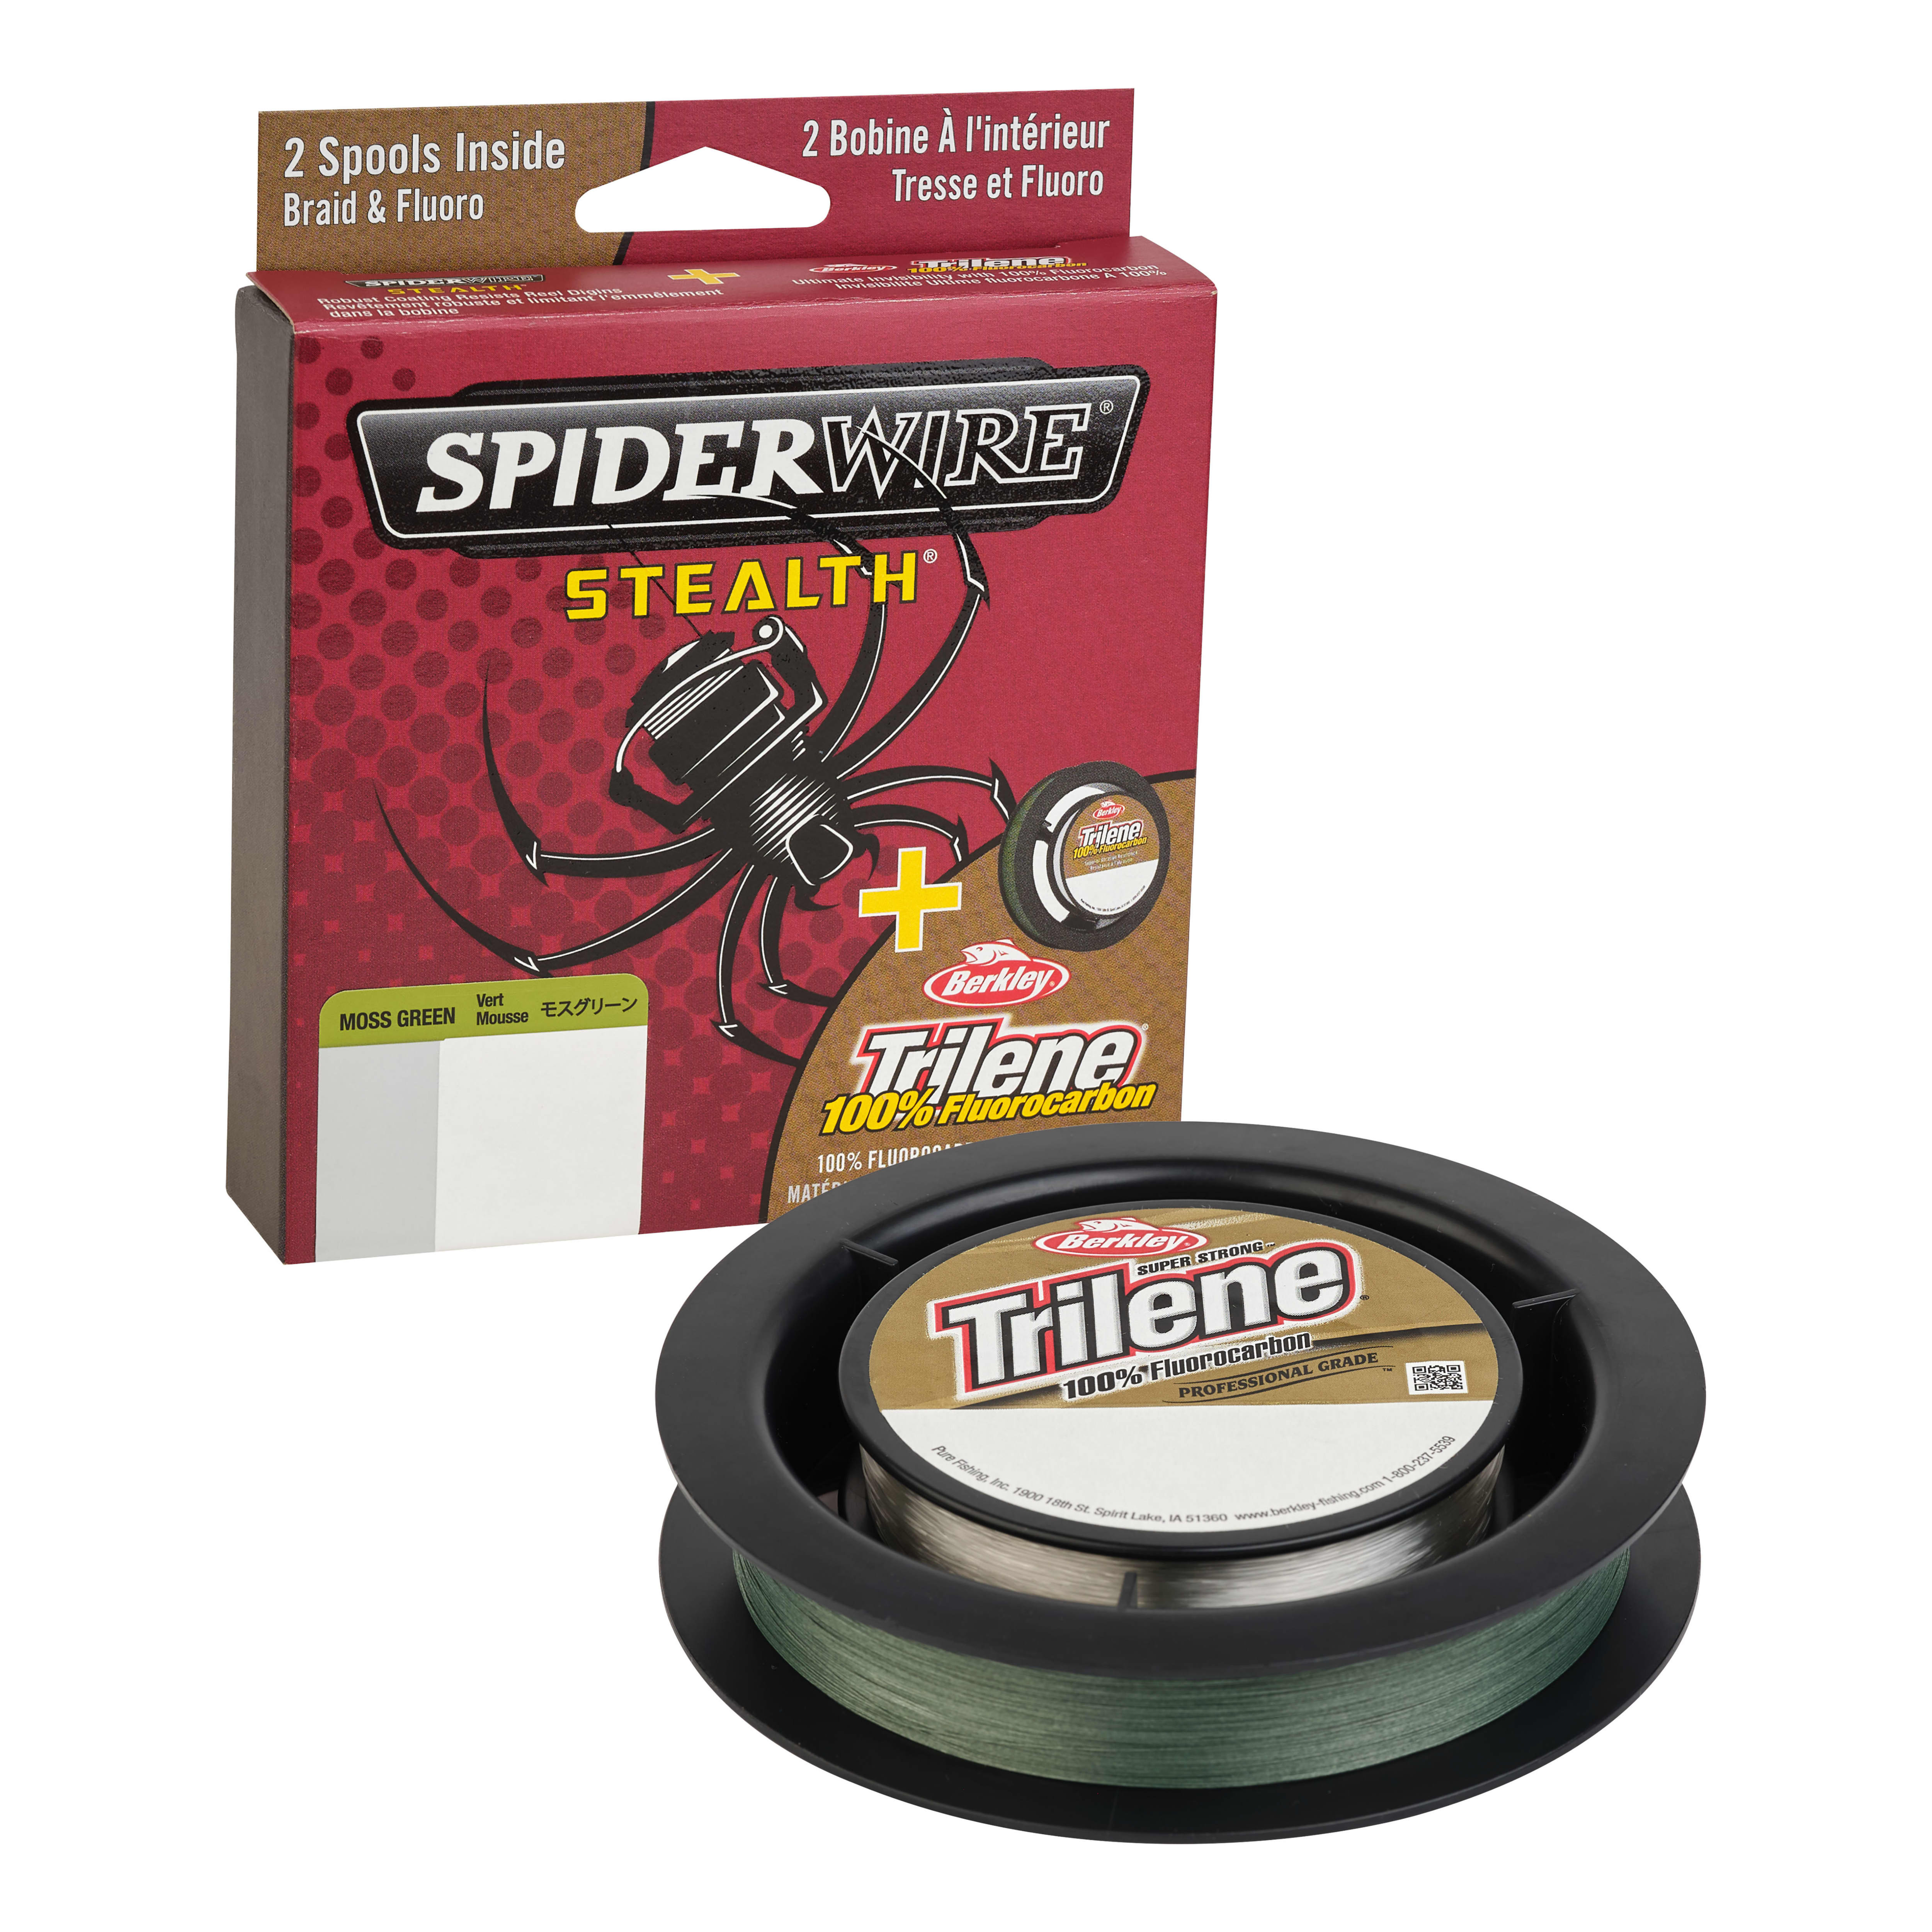 SpiderWire Stealth Camo Braid – Blue Ridge Inc, spiderwire stealth